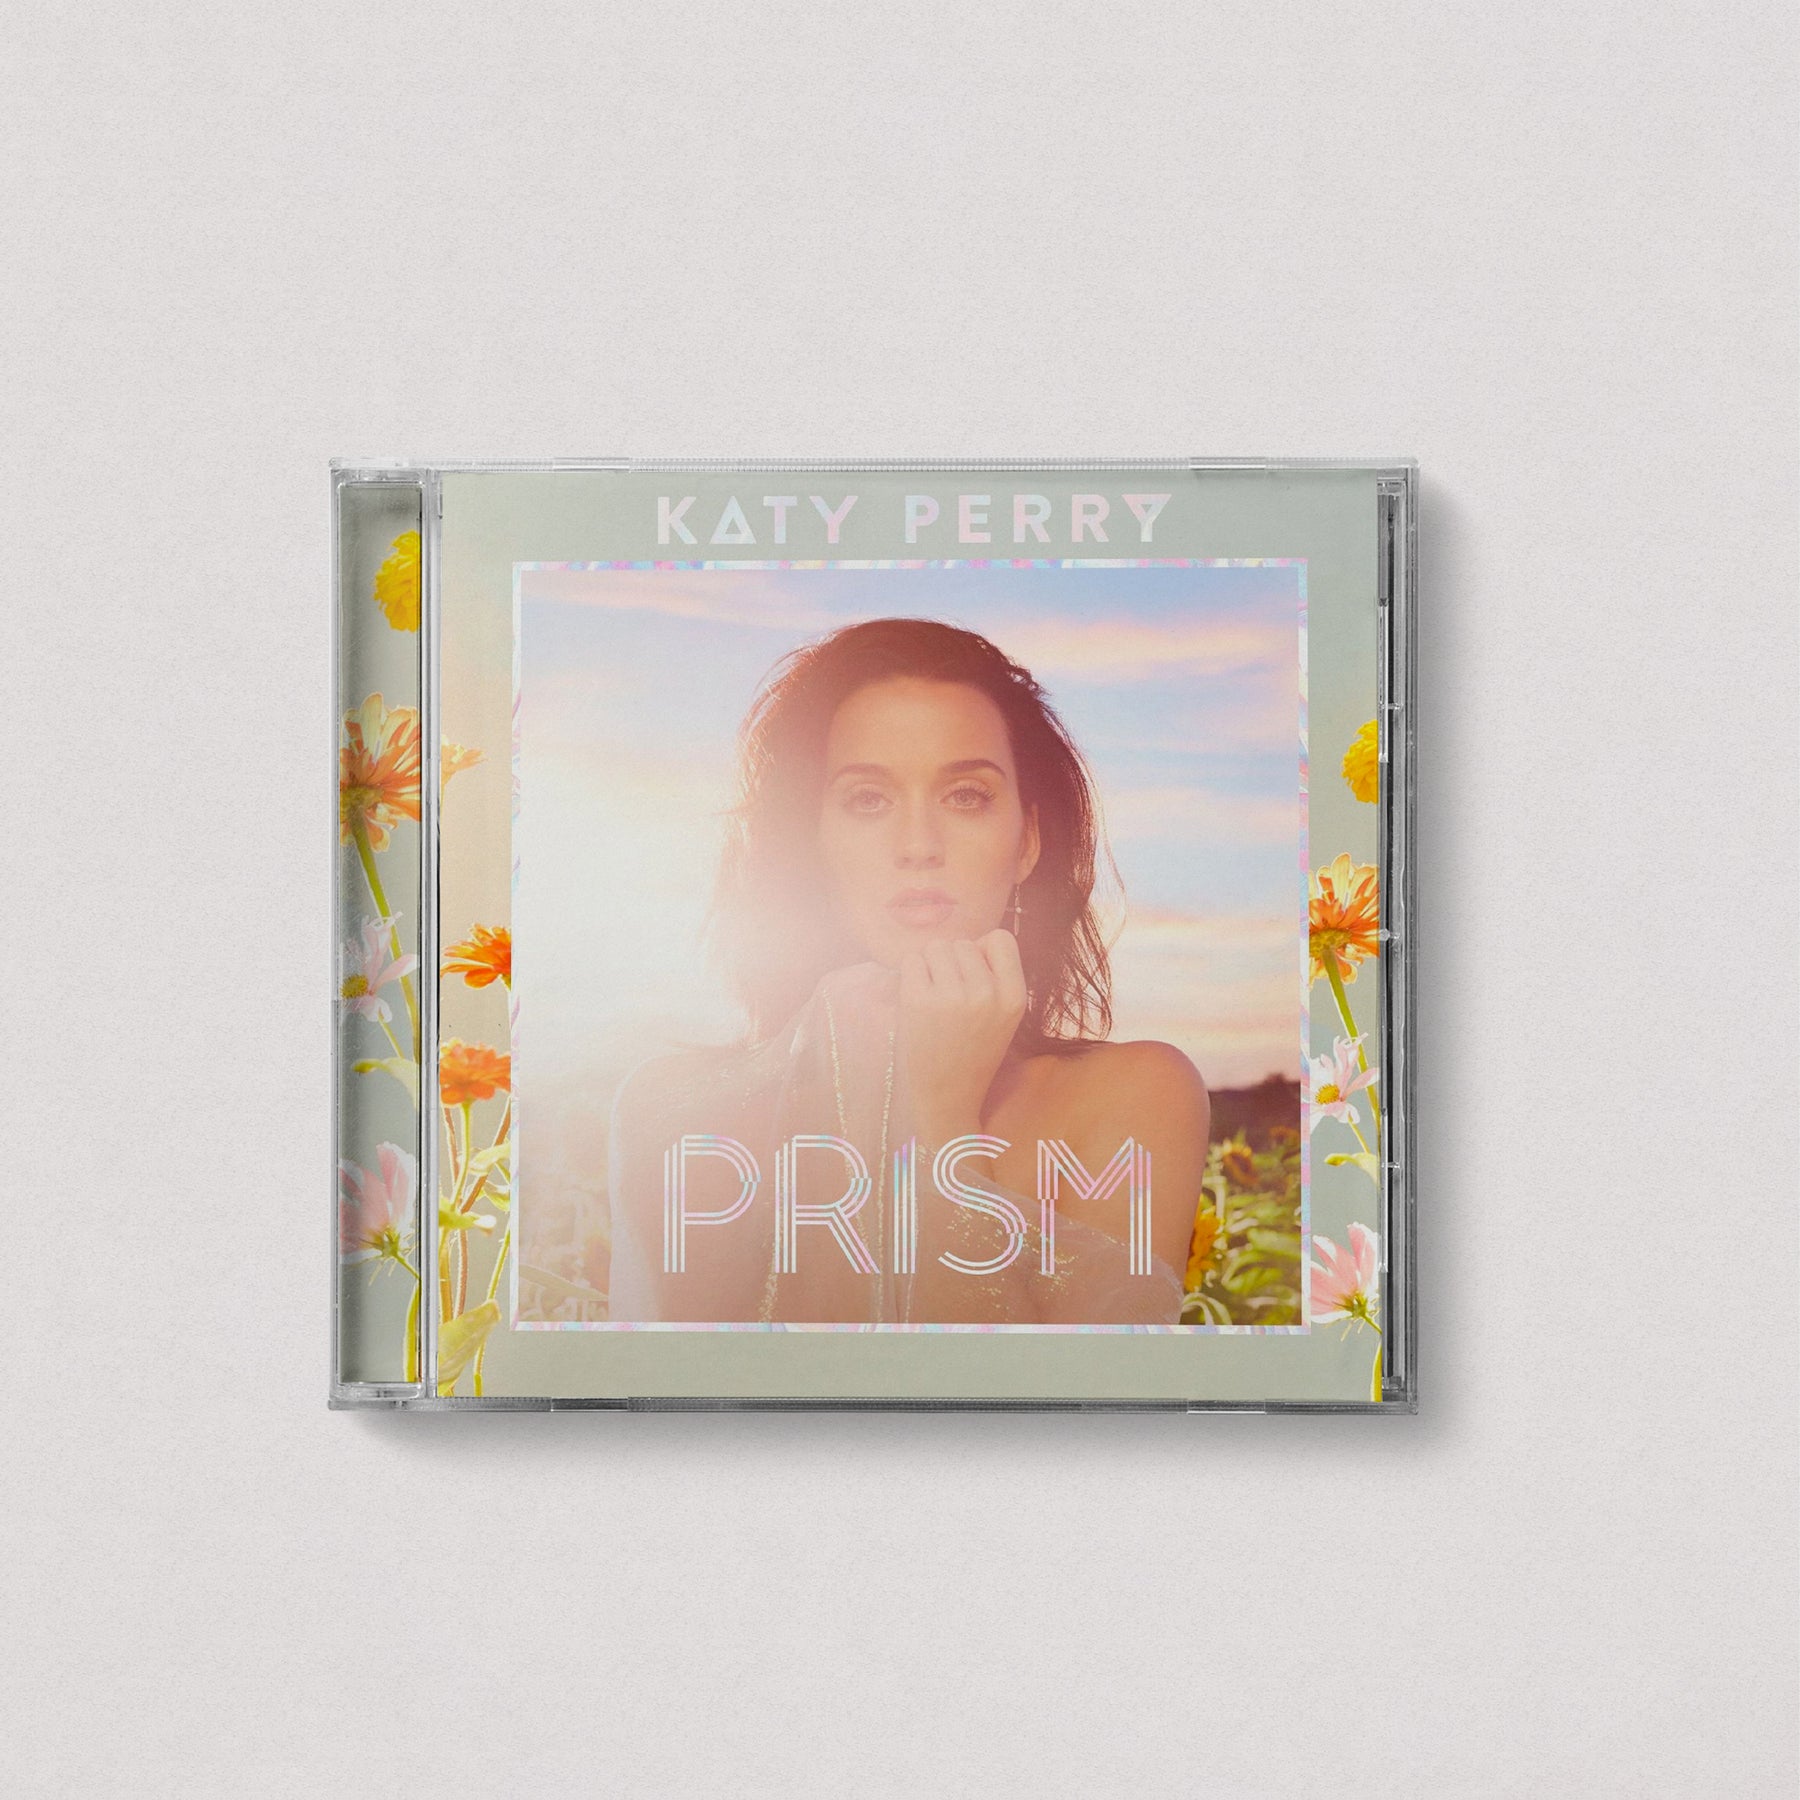 Katy Perry - Prism (Standard, CD)